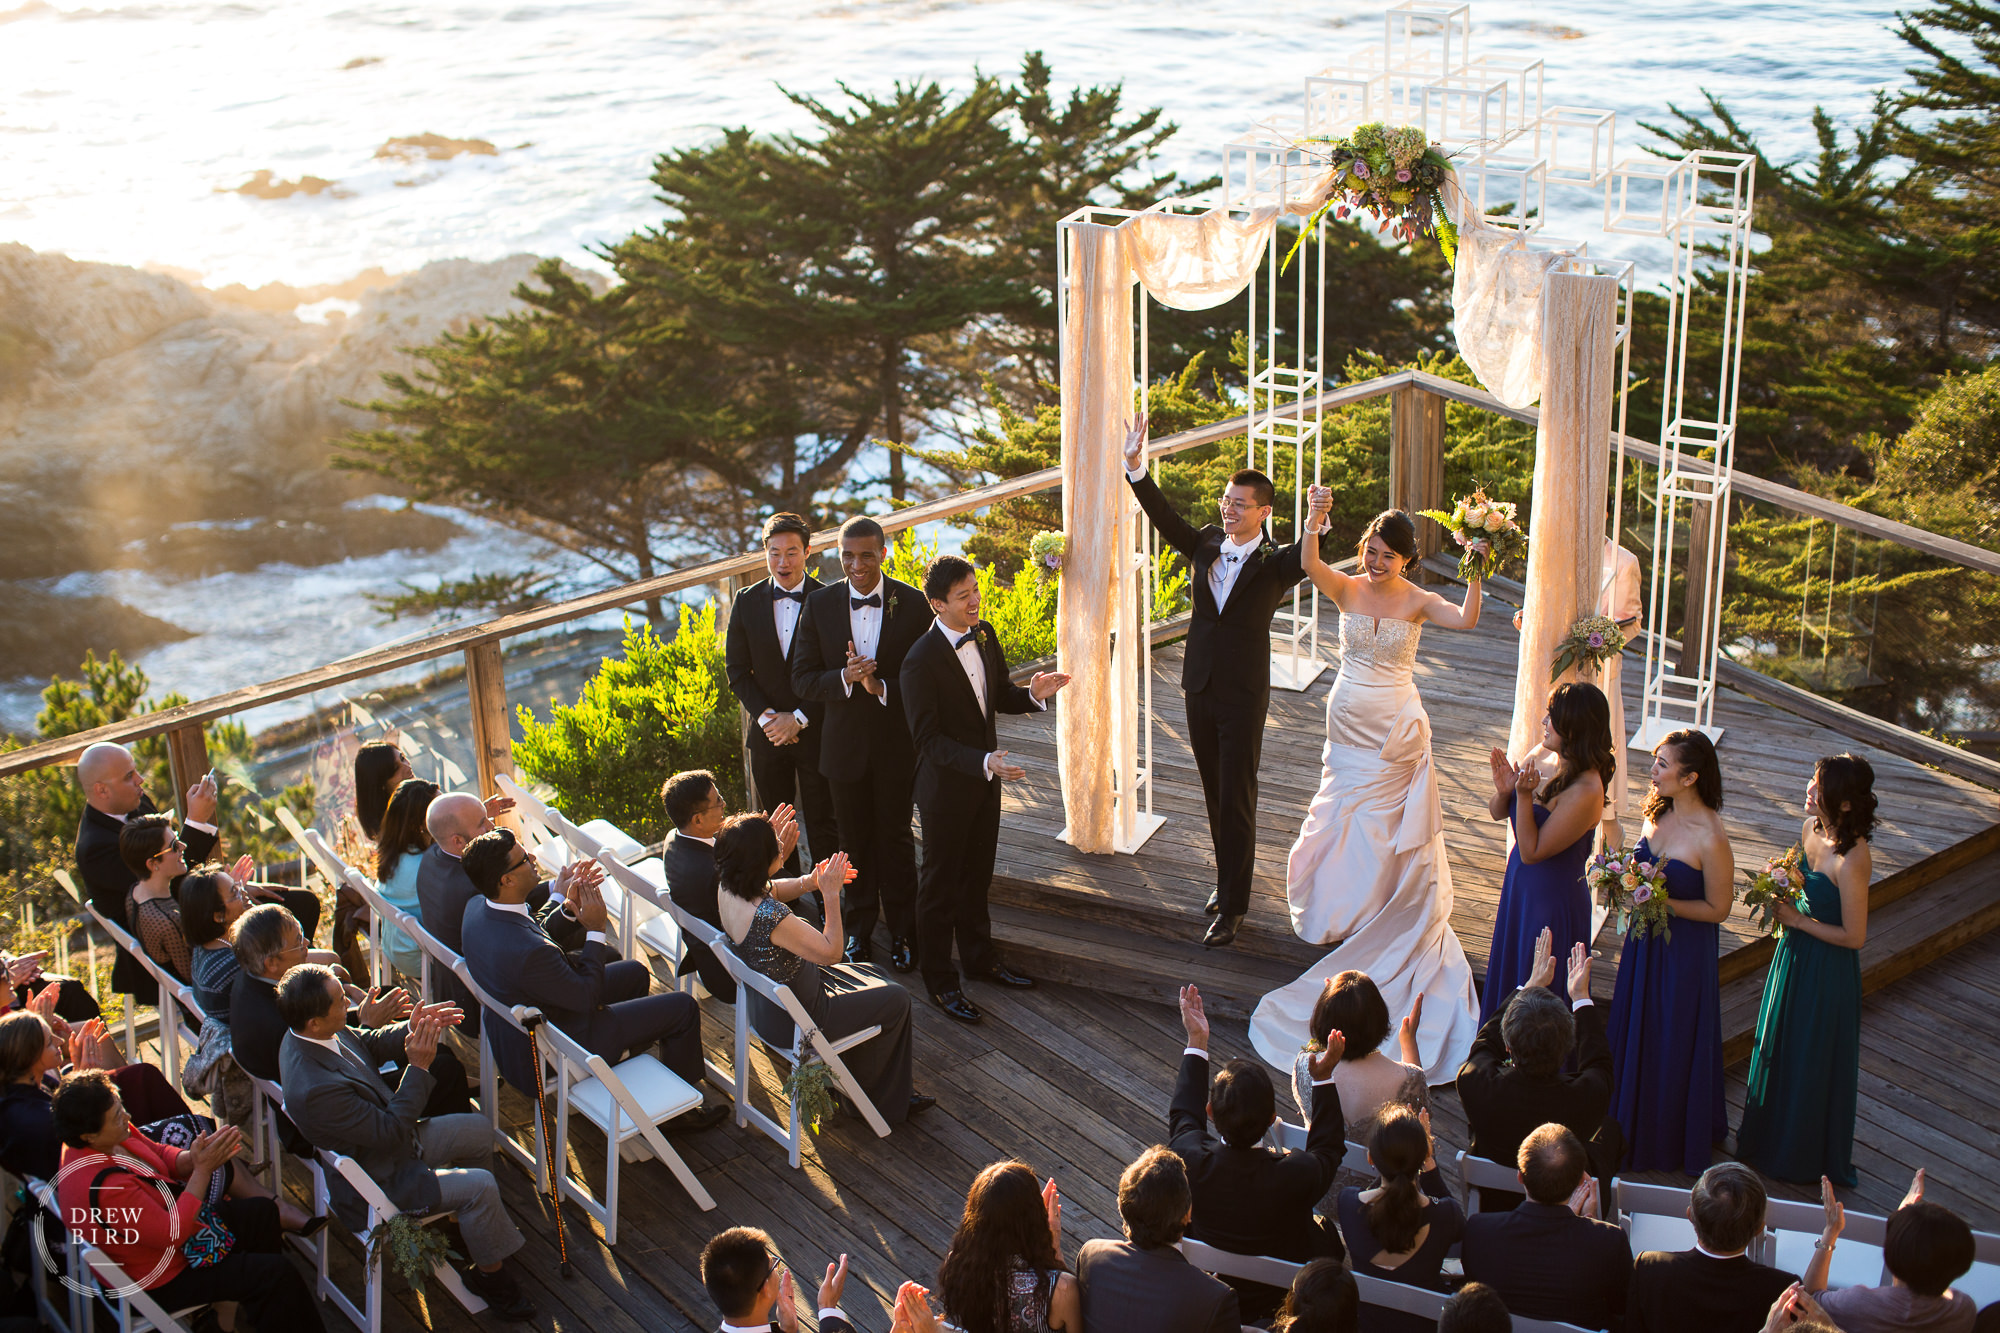 SF Bay Area wedding venues featuring Hyatt Carmel Highlands in Big Sur. Wedding couple celebrating during outdoor ceremony overlooking pacific ocean.